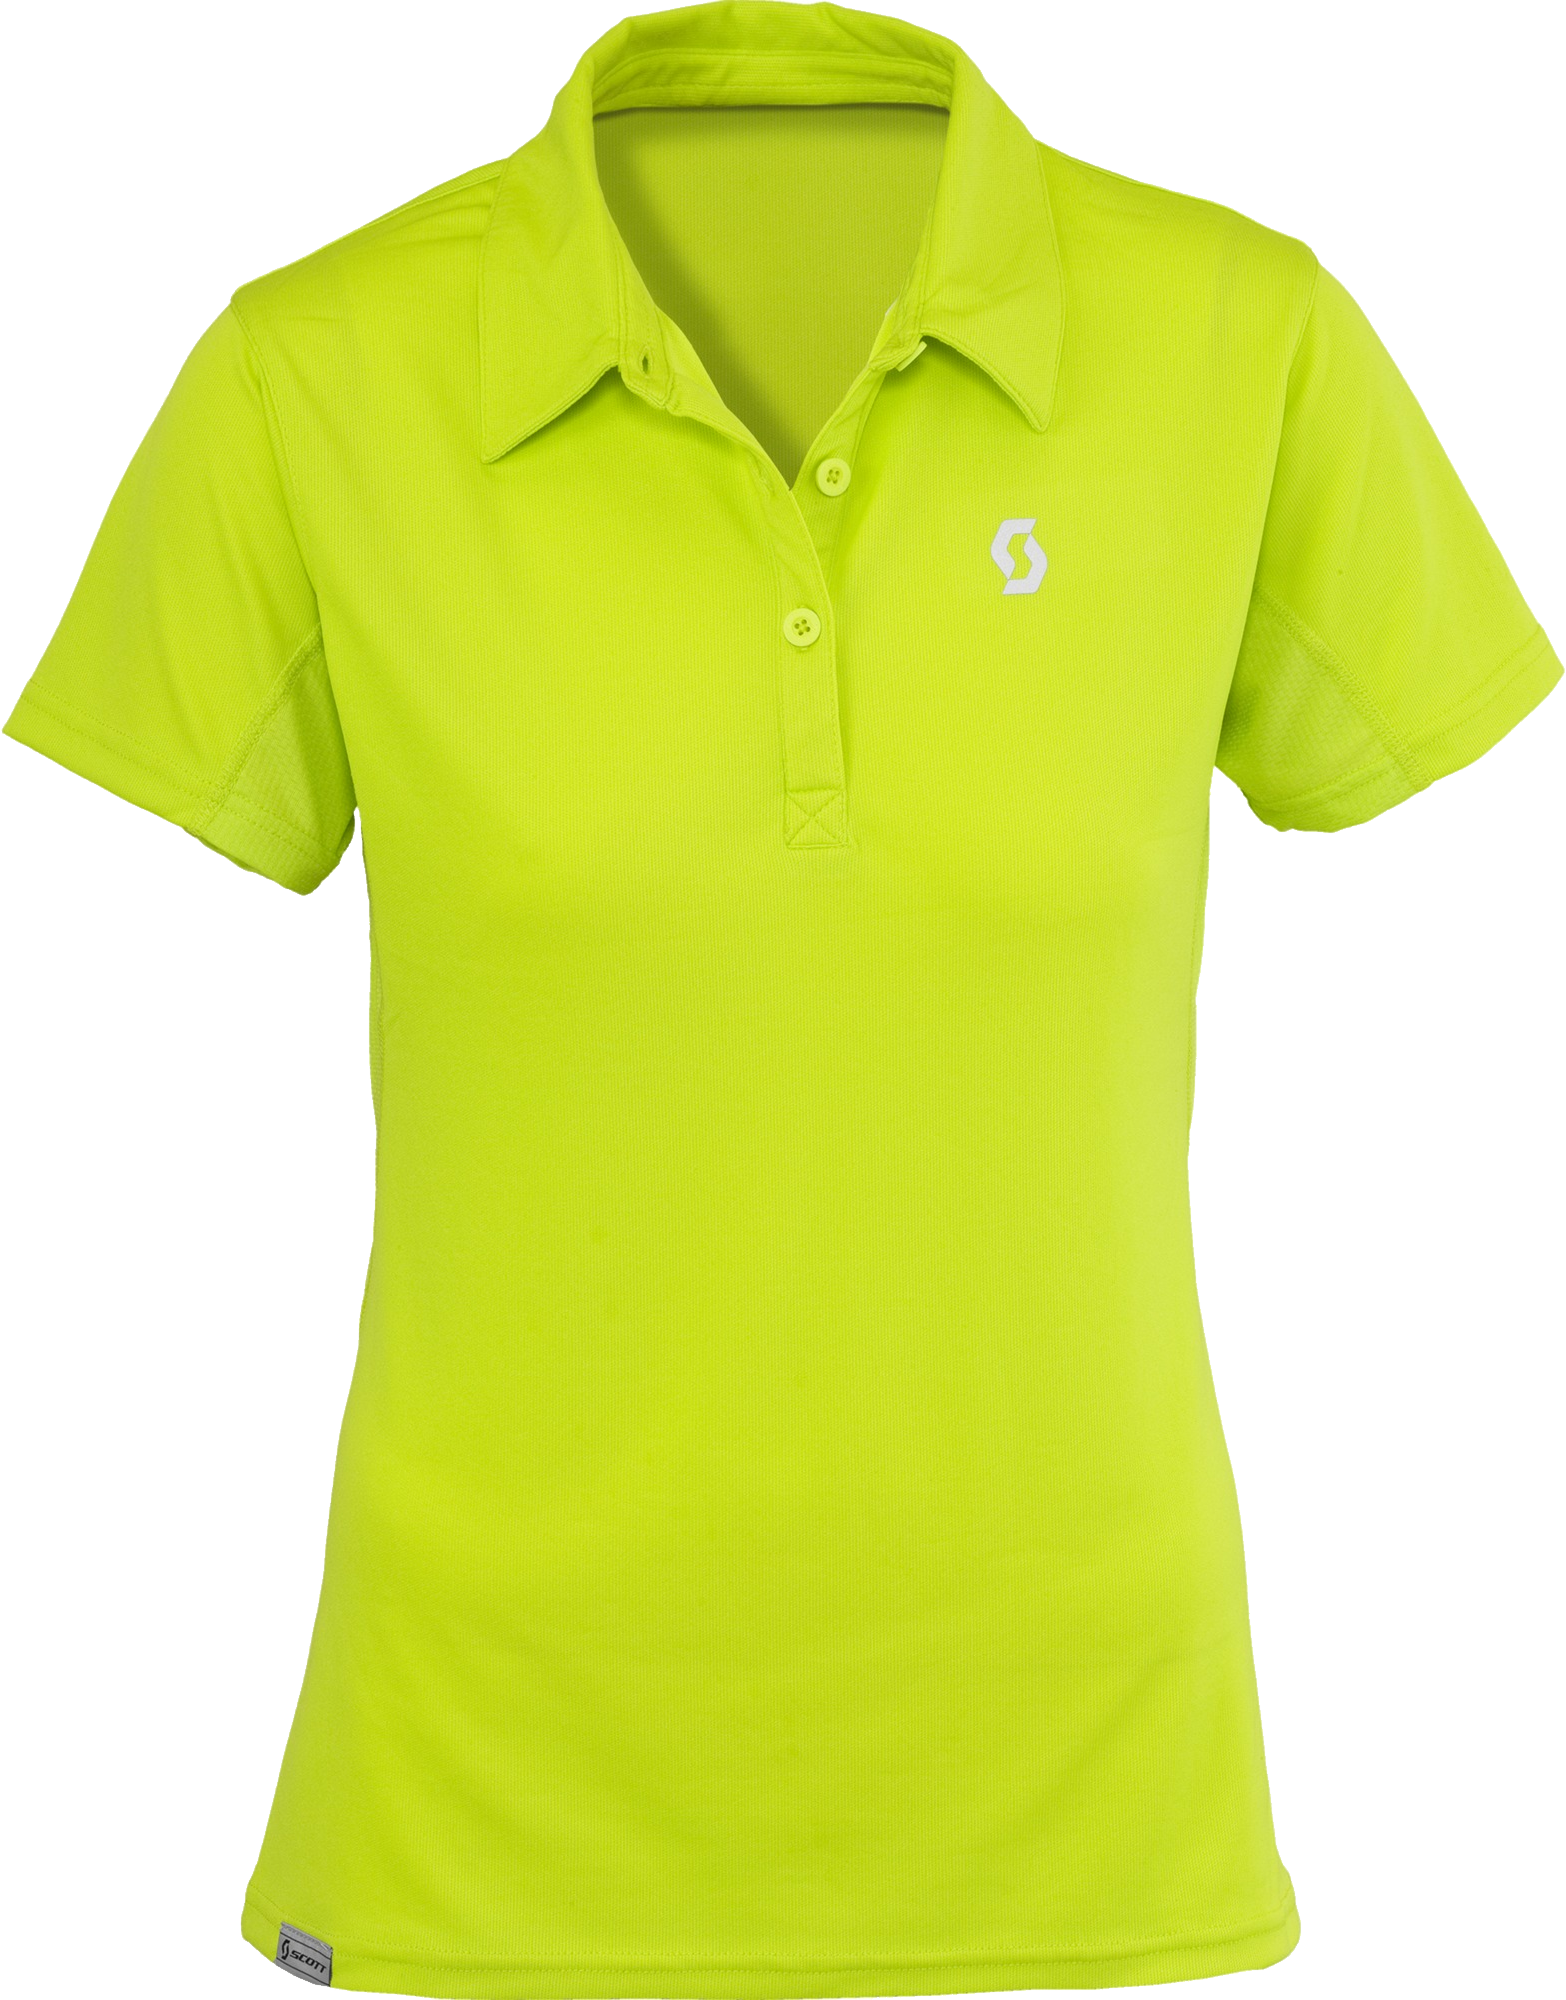 Download - Light Green Polo Shirt (1566x2000)